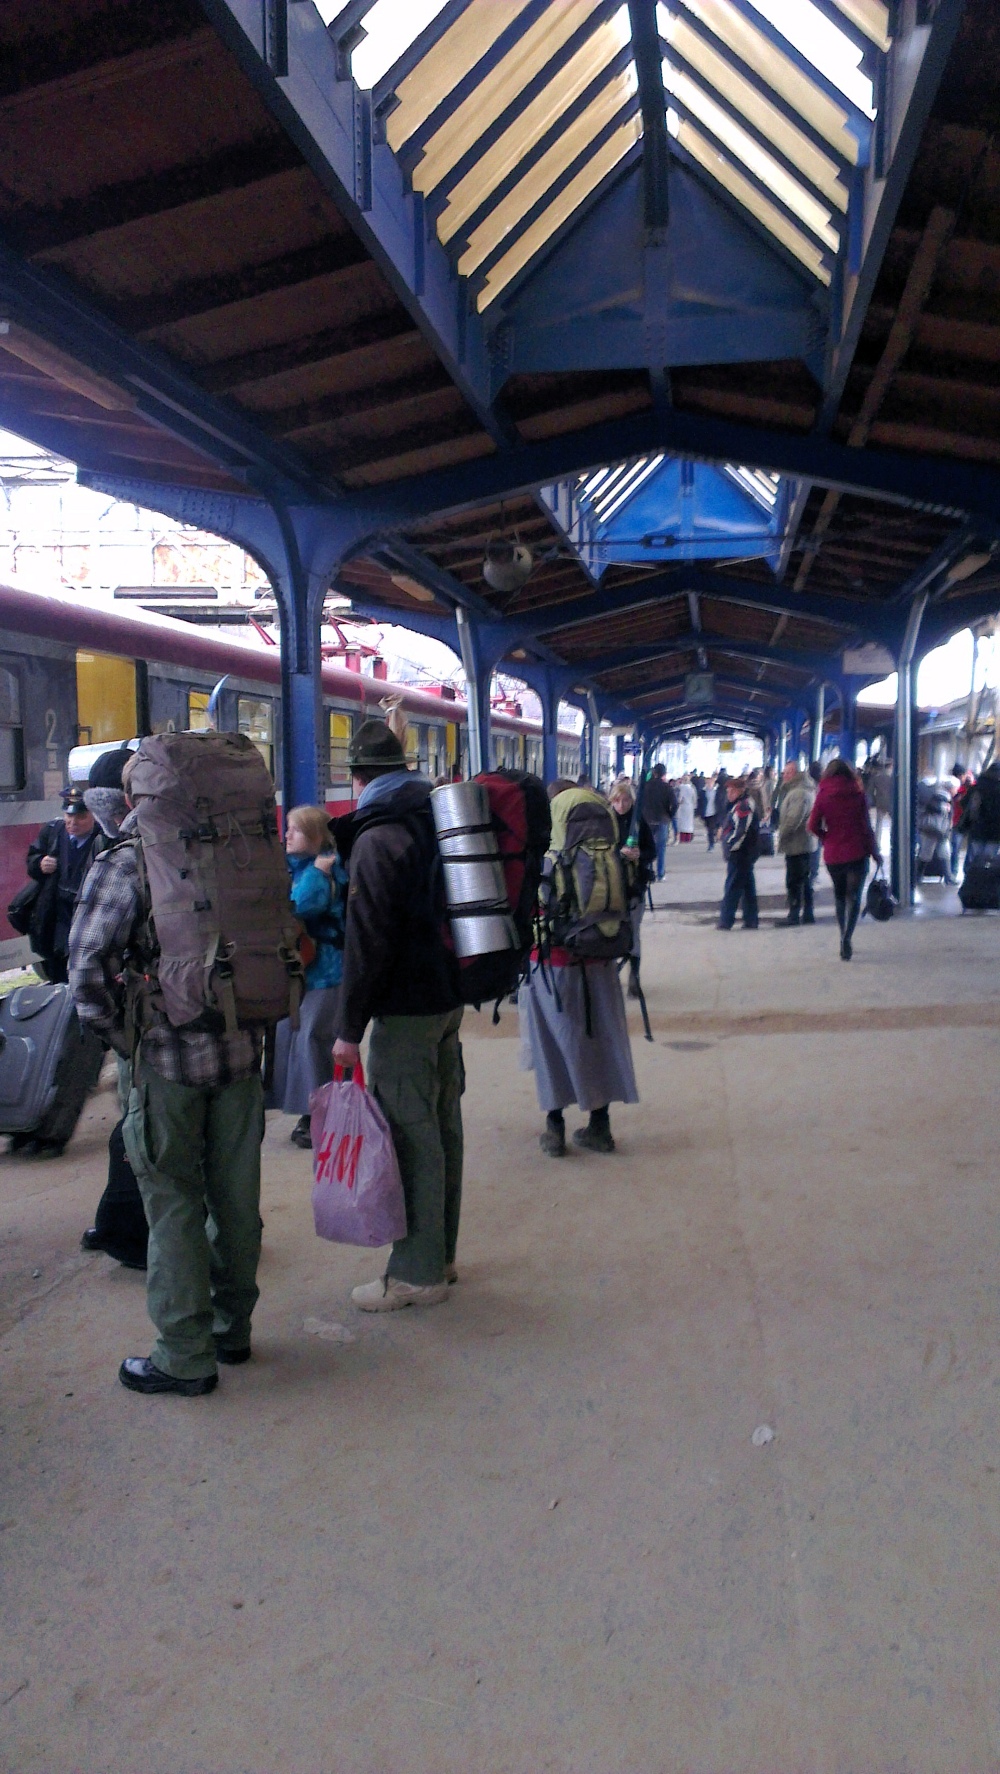 A large crowd on the station platform